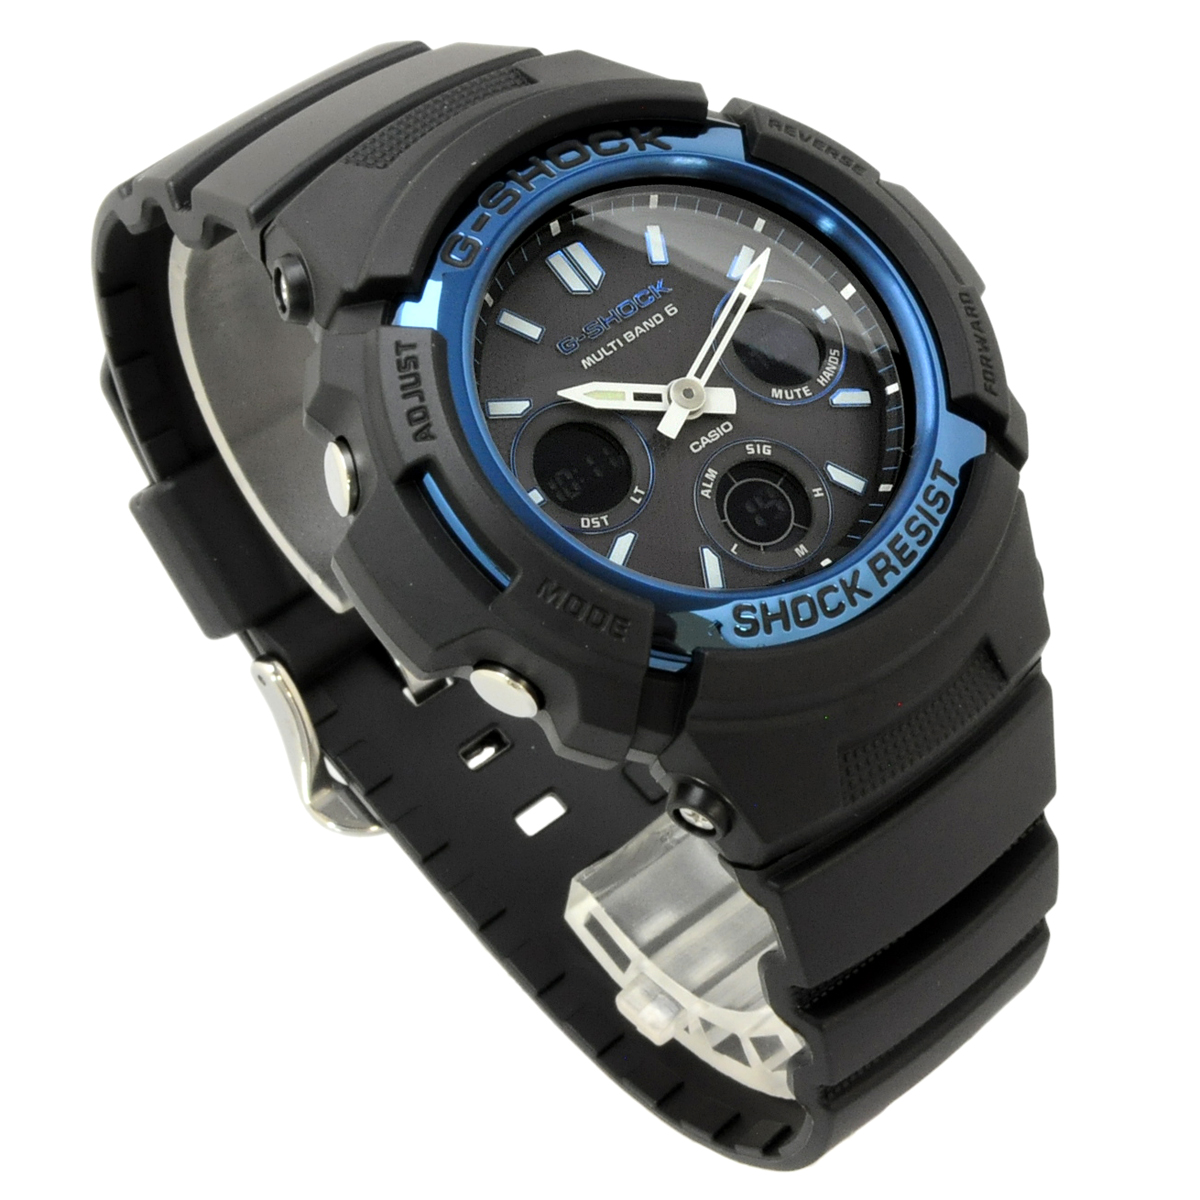 CASIO カシオ 腕時計 メンズ G-SHOCK Gショック 海外モデル 電波ソーラー マルチバンド6 AWG-M100A-1A